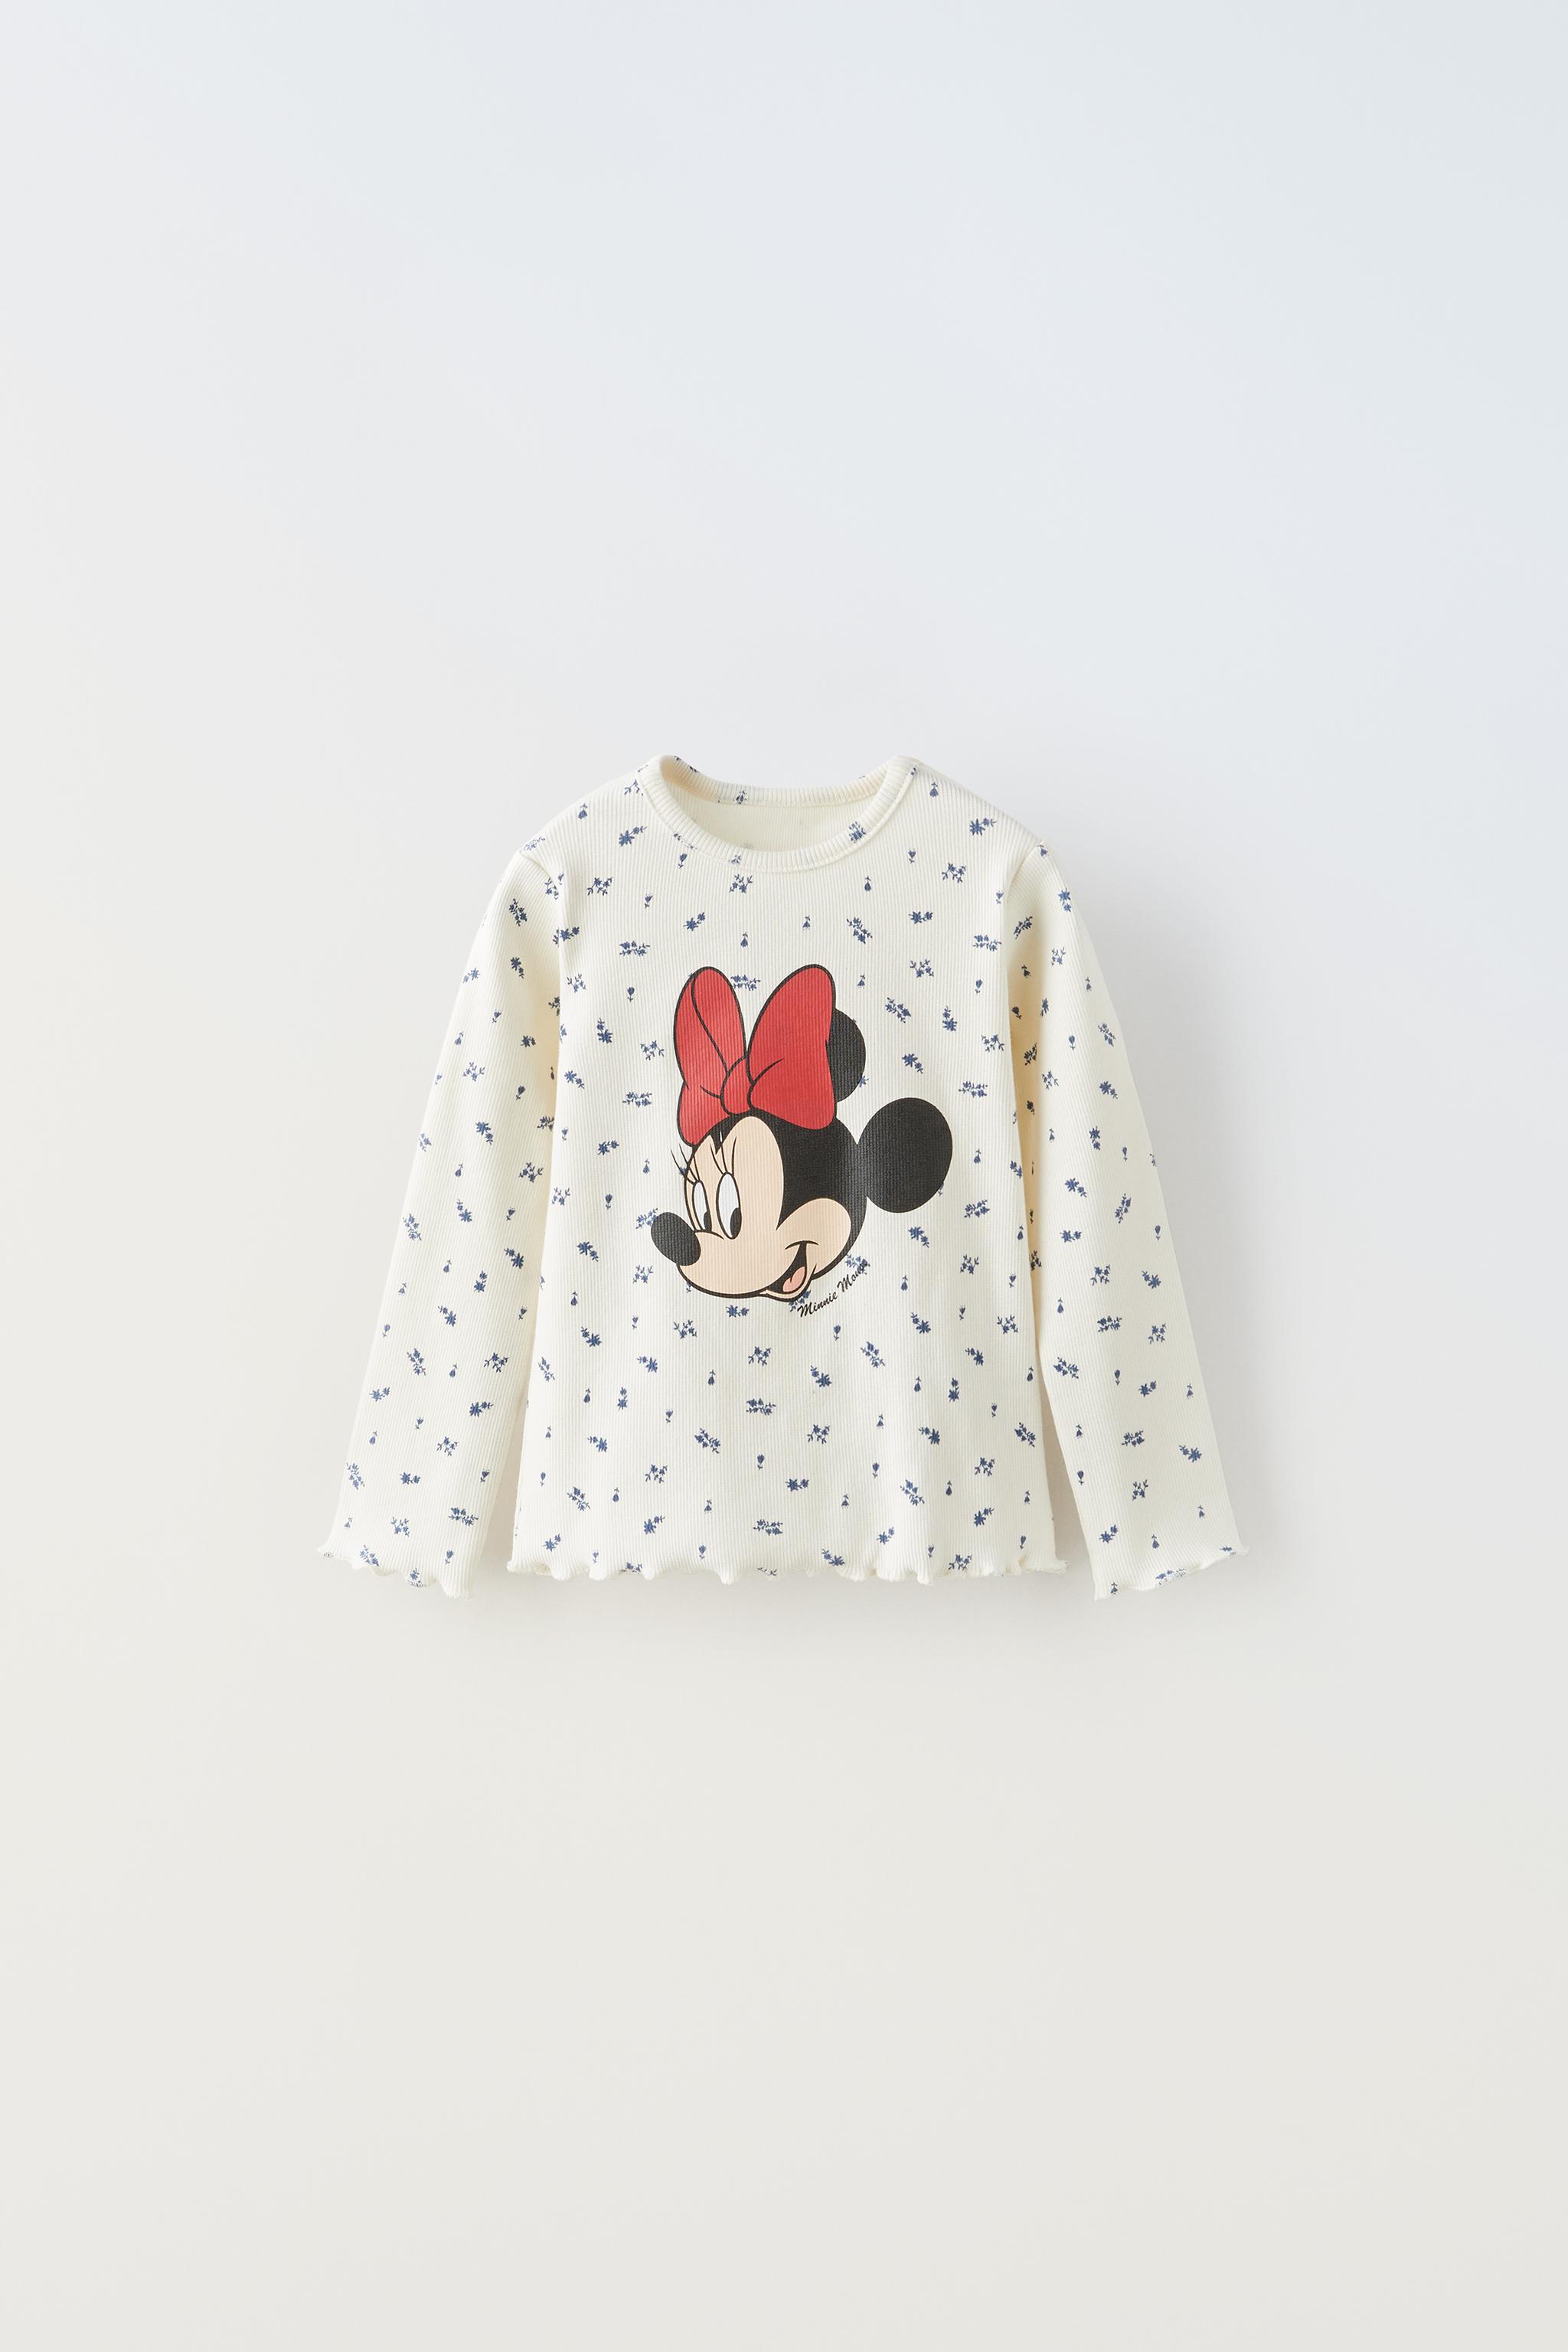 Minnie mouse sweatshirt - Girls